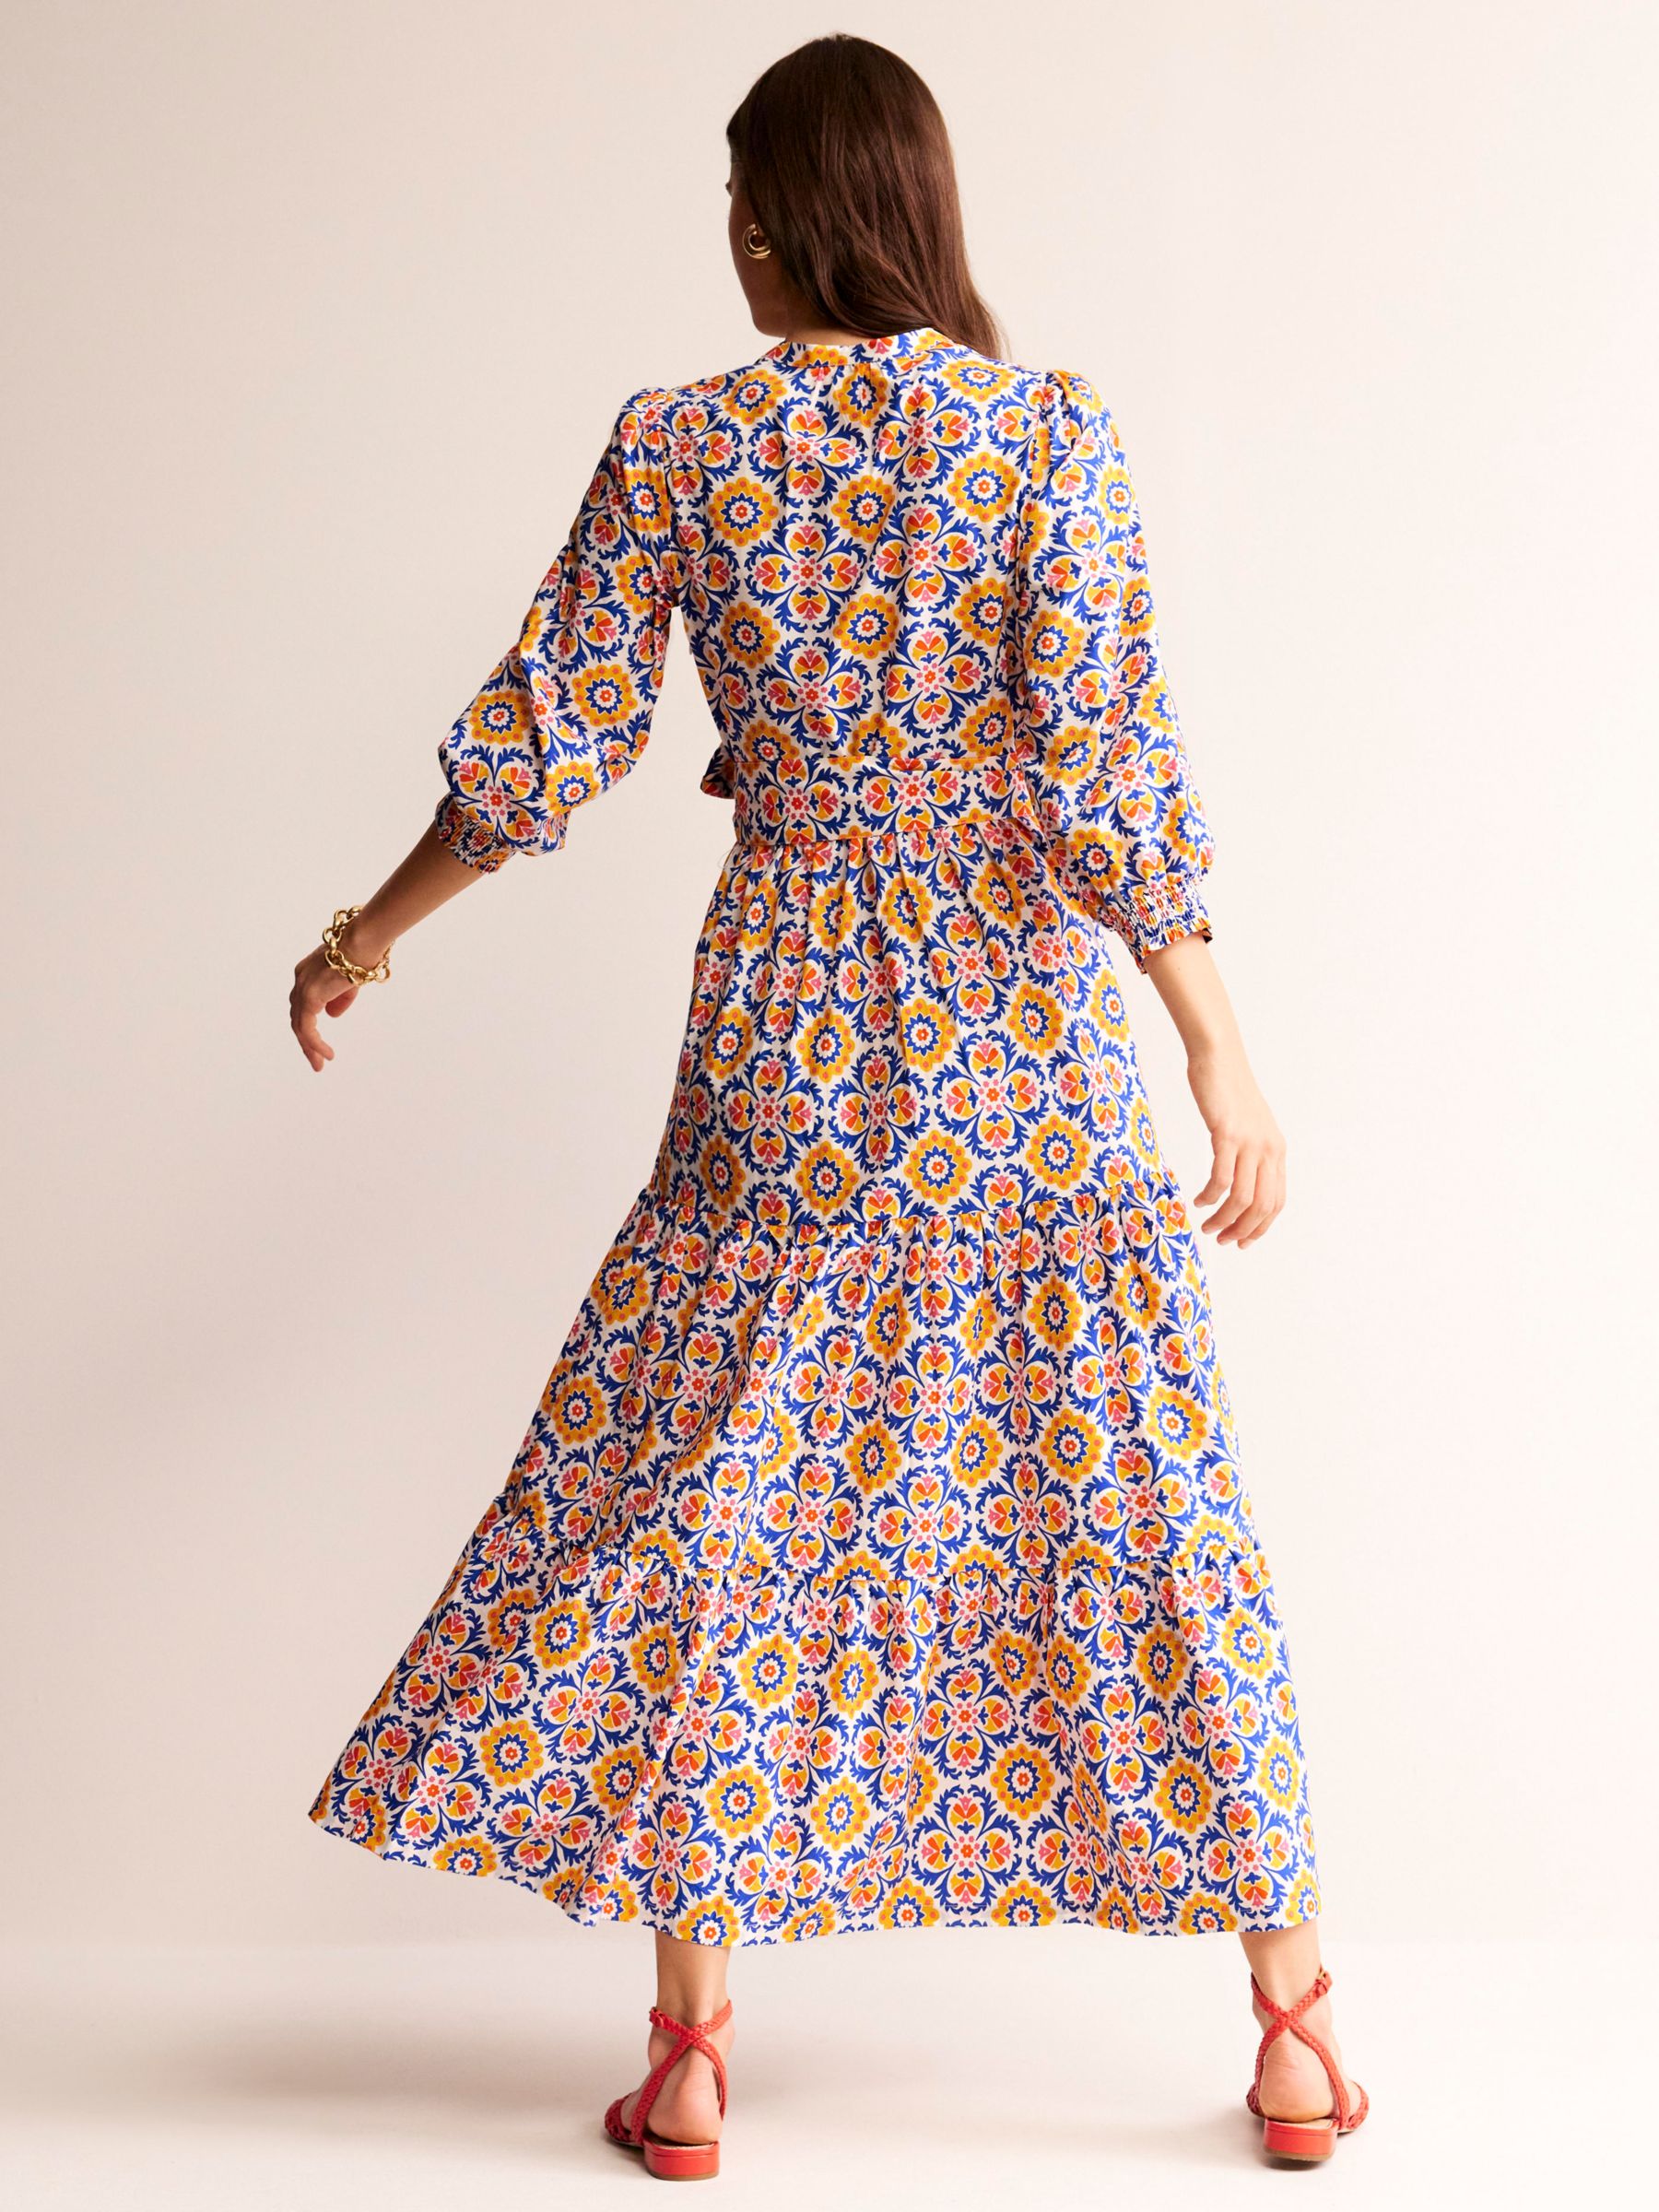 Boden Alba Mosaic Bloom Print Tiered Cotton Dress, Gold/Multi, 12